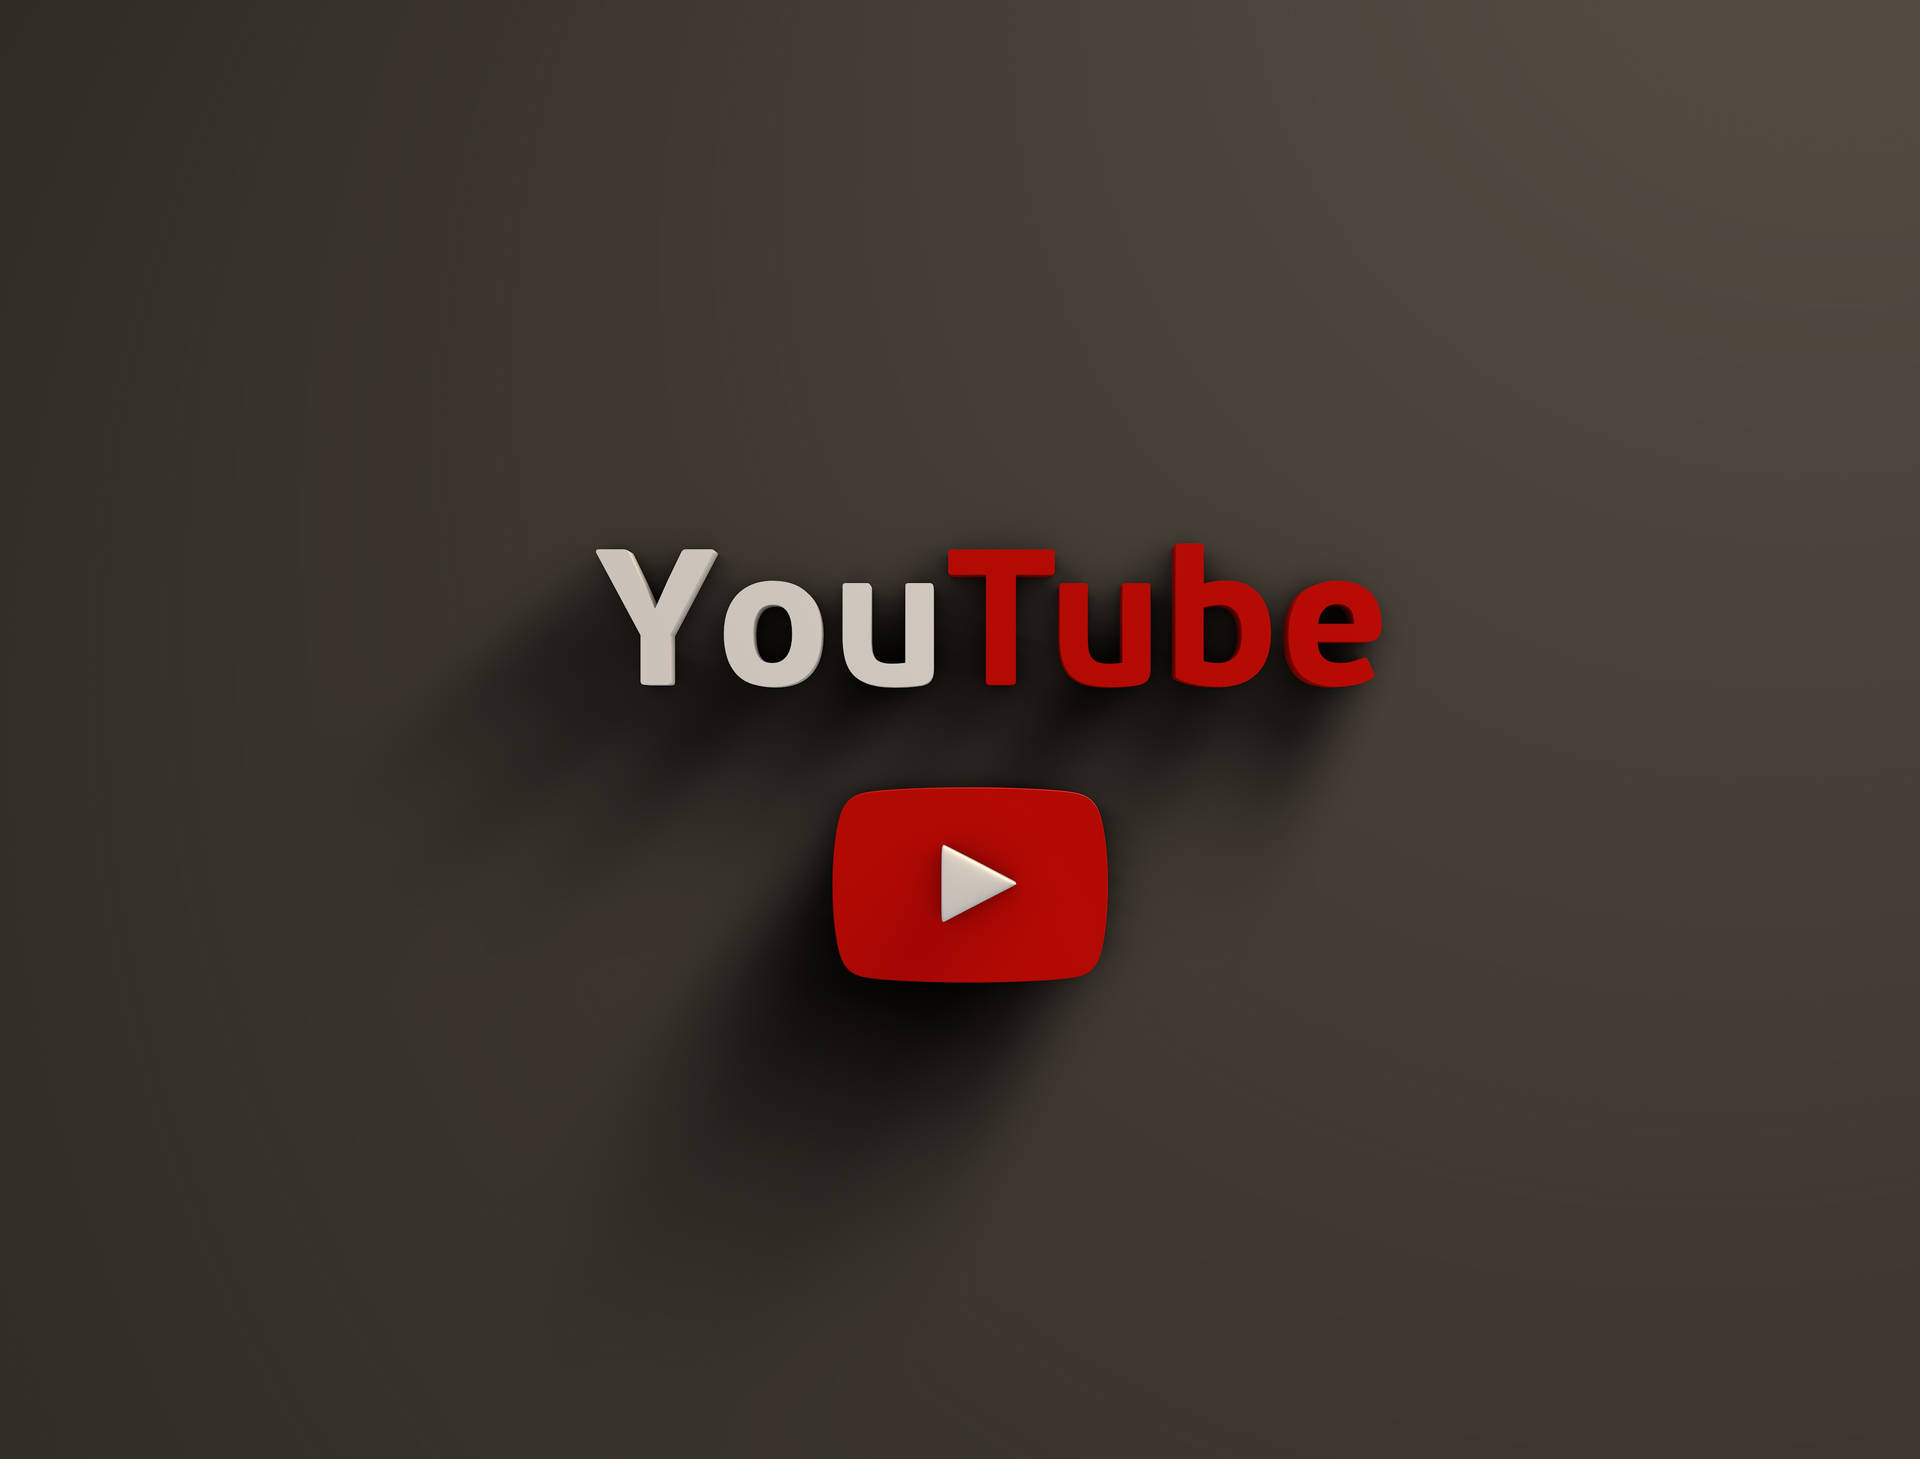 Youtube-logo På Mørkegrå Baggrund Wallpaper